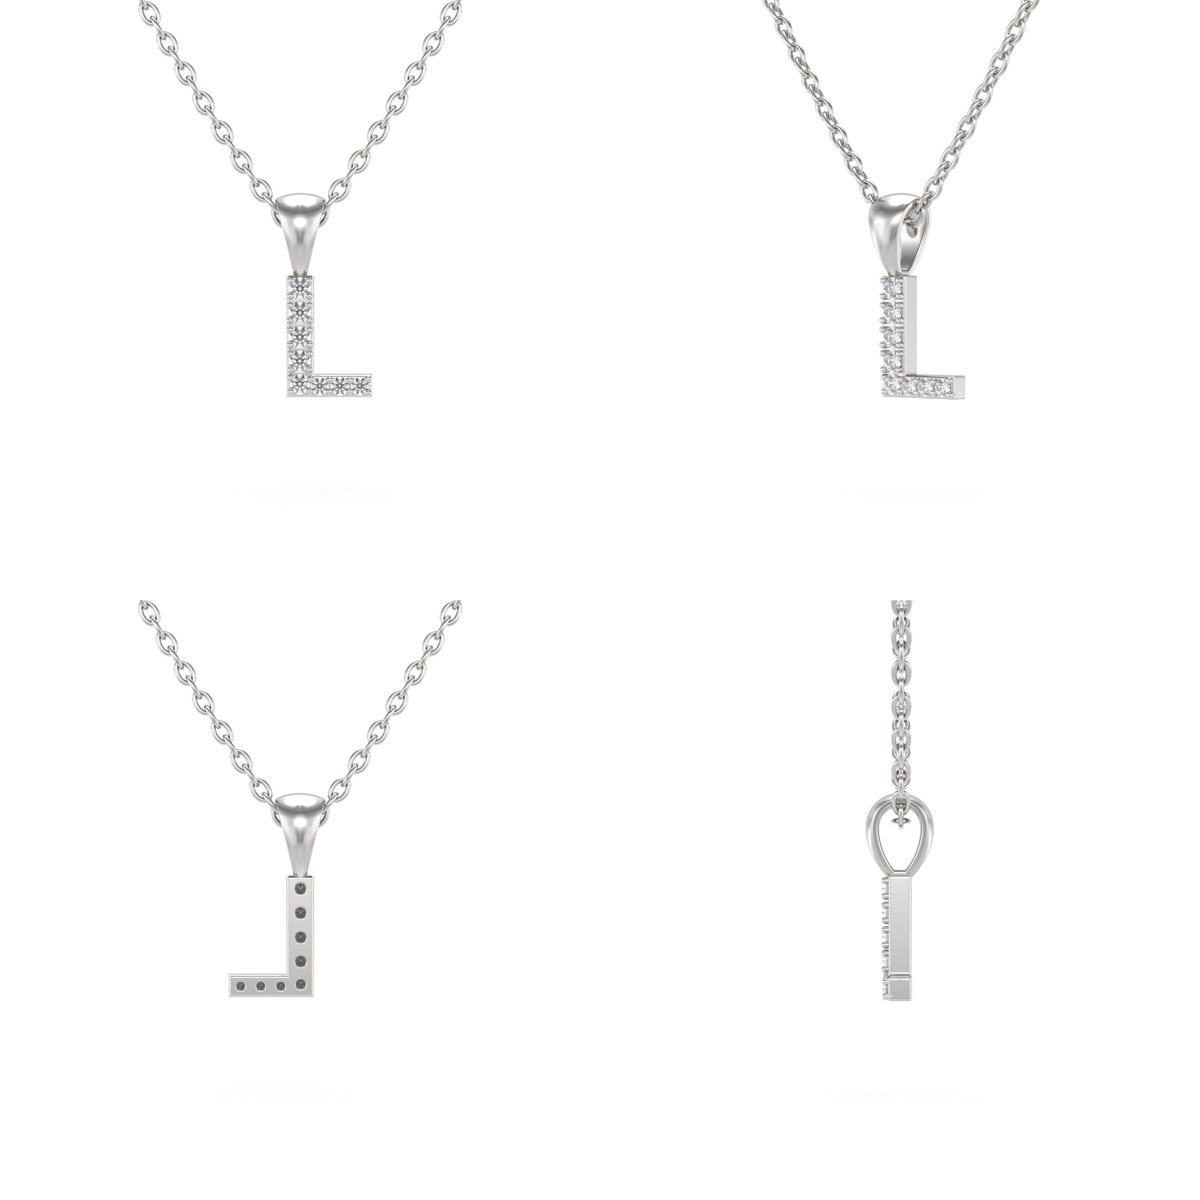 Collier Pendentif ADEN Lettre L Or 750 Blanc Diamant Chaine Or 750 incluse 0.72grs - vue 2